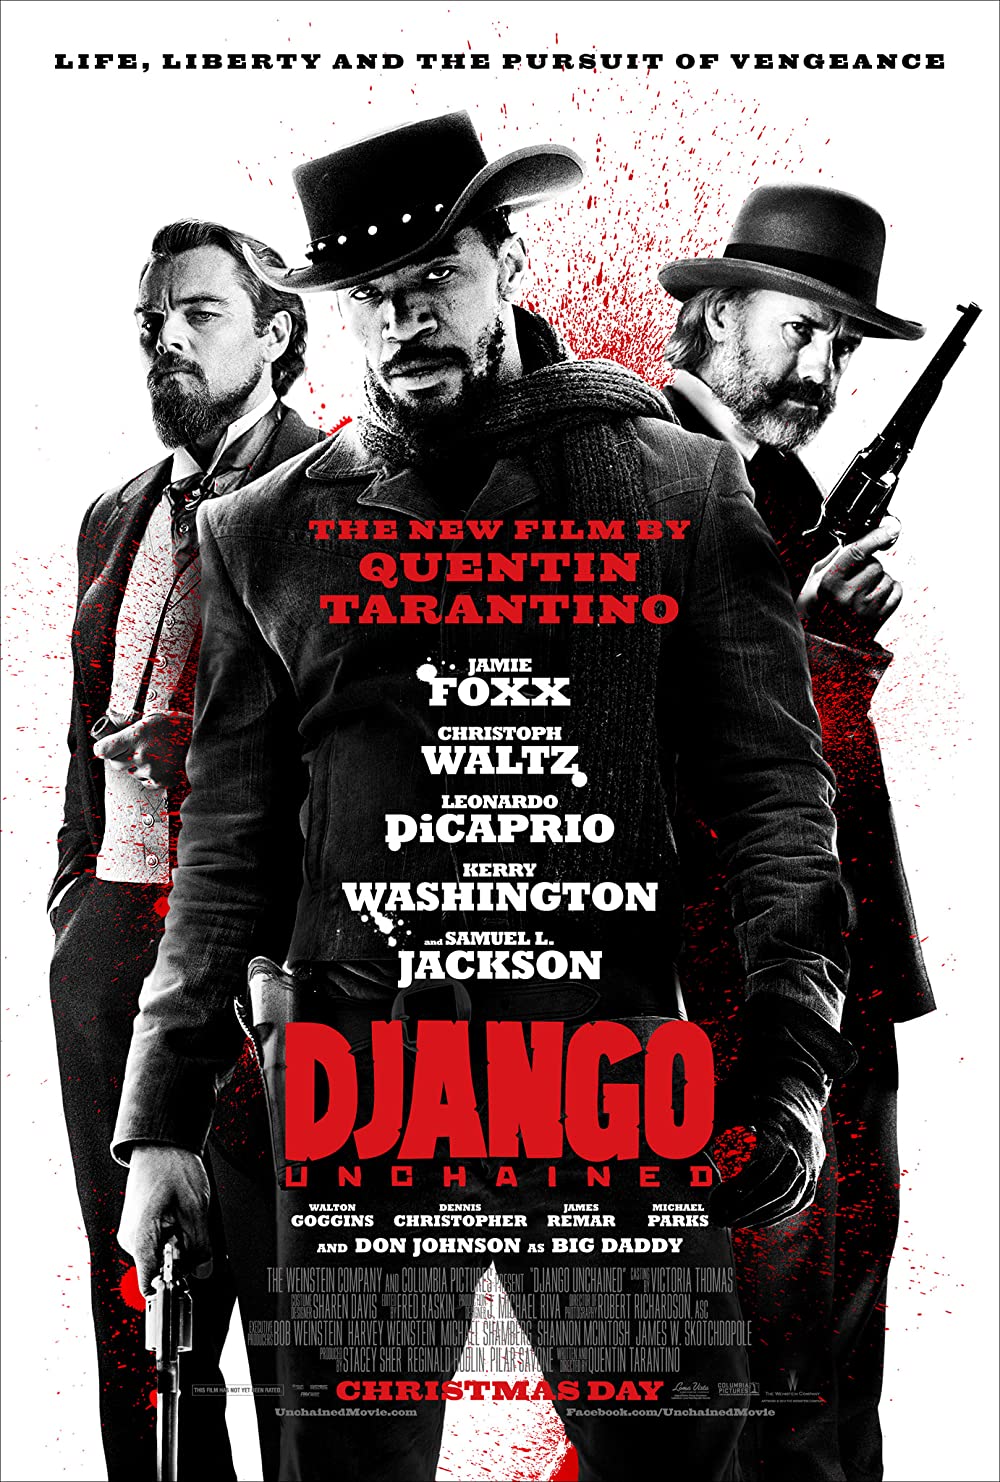 Filmbeschreibung zu Django